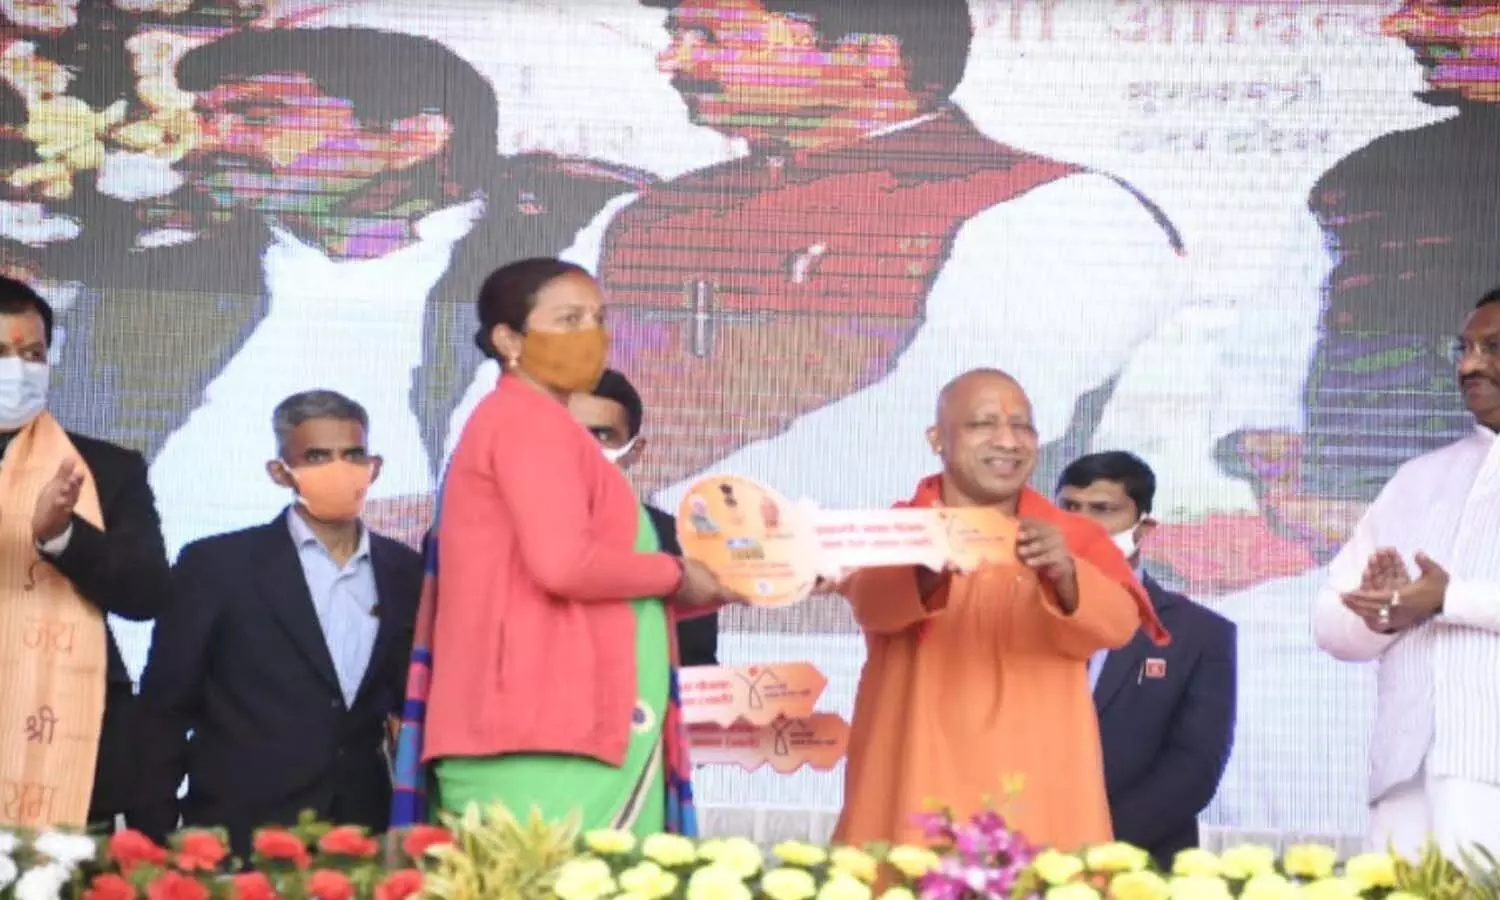 Ayodhya News: Two-day Ayush Mela organized in Ayodhya, CM Yogi laid the foundation stone of 131 projects